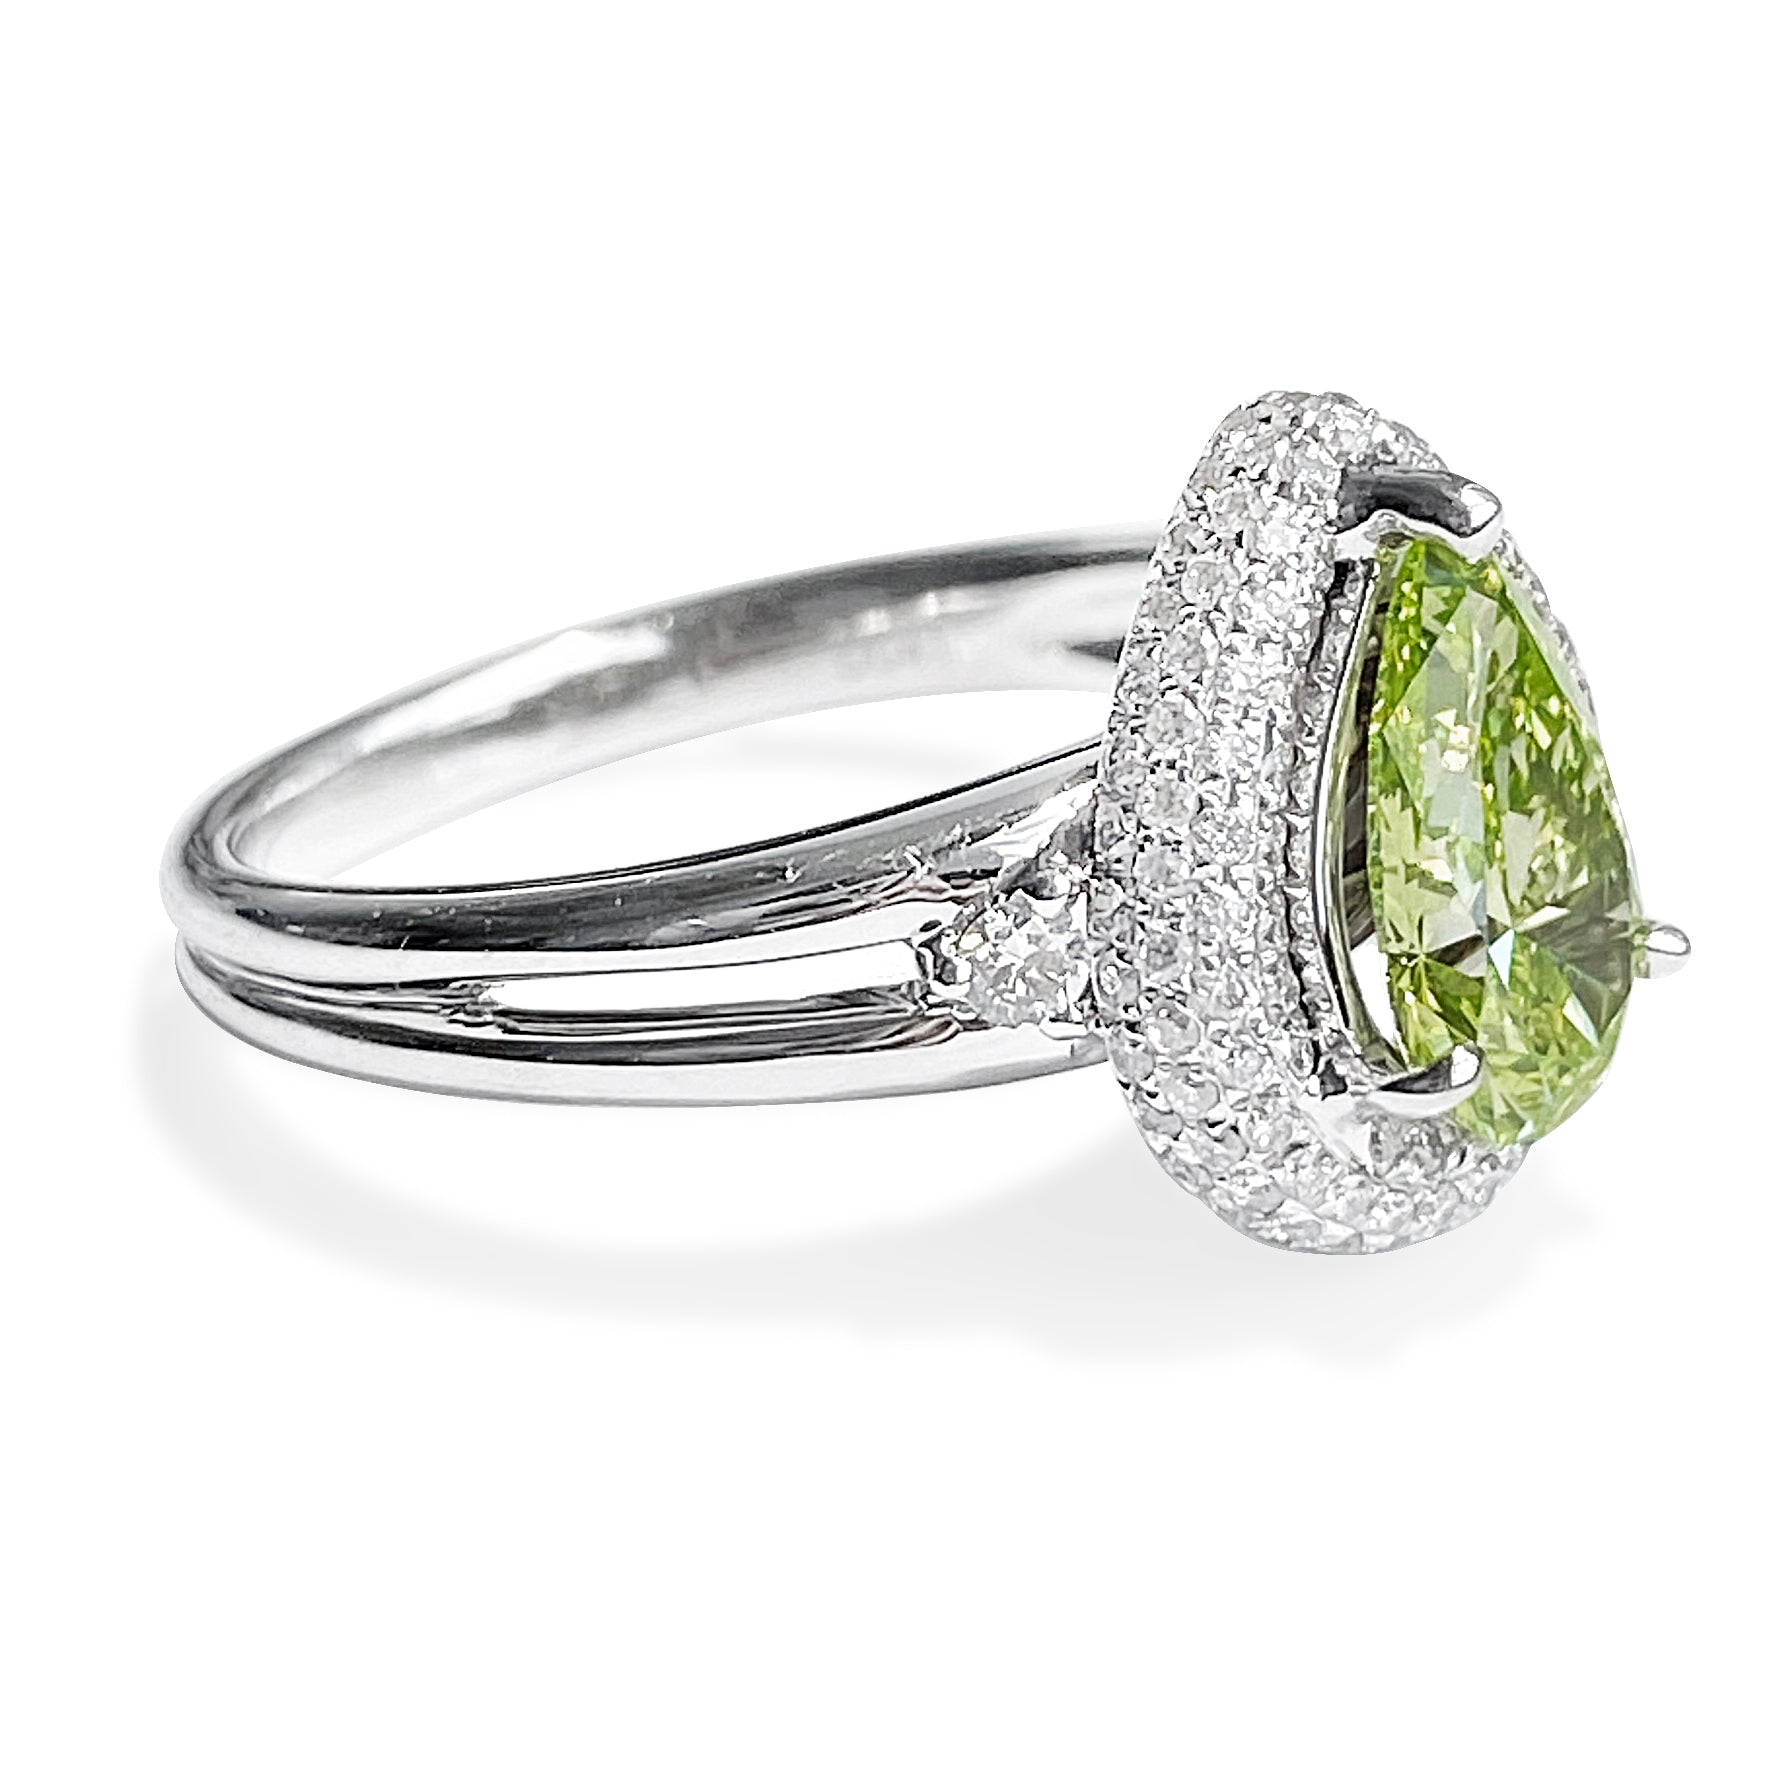 1.11 Carat Fancy Yellow-Green Pear Shape Diamond Halo Ring